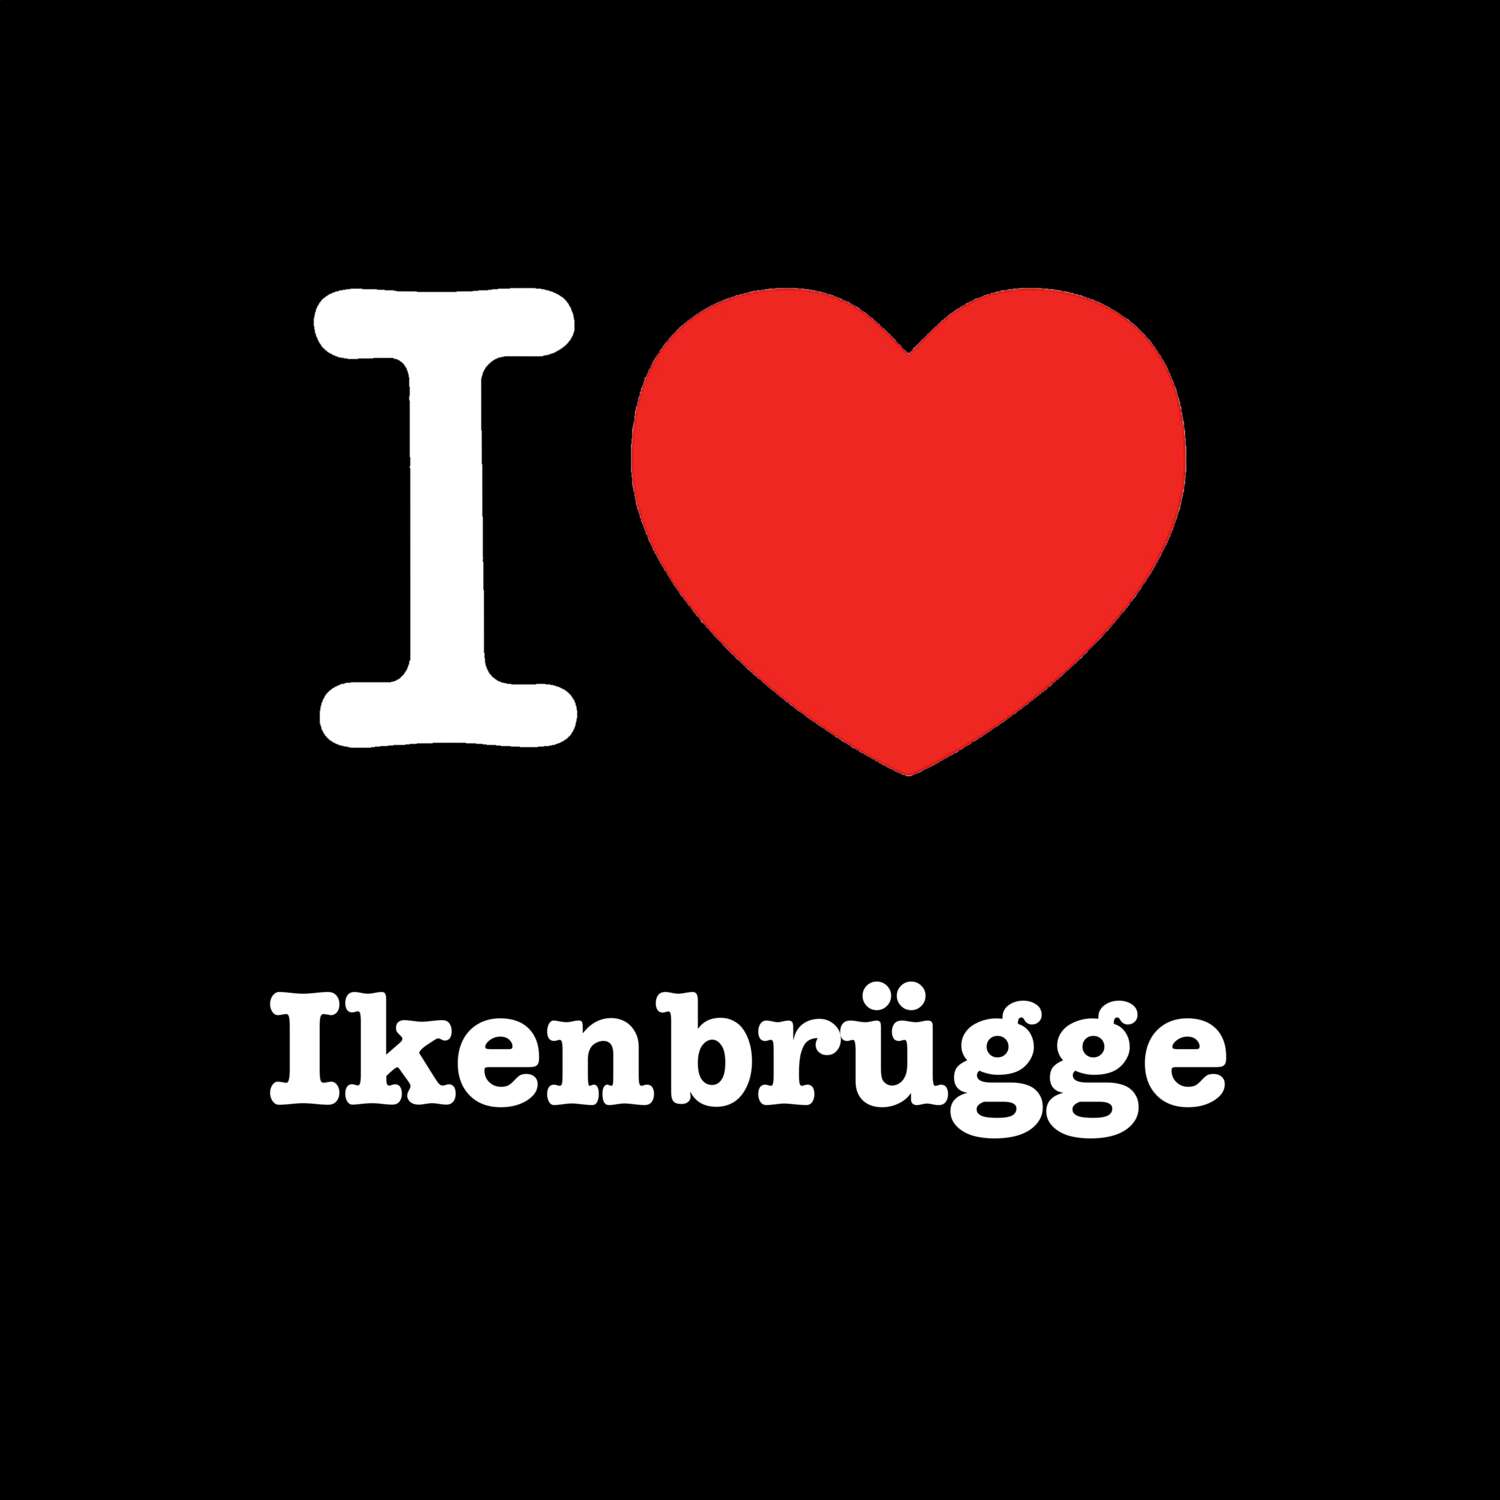 Ikenbrügge T-Shirt »I love«